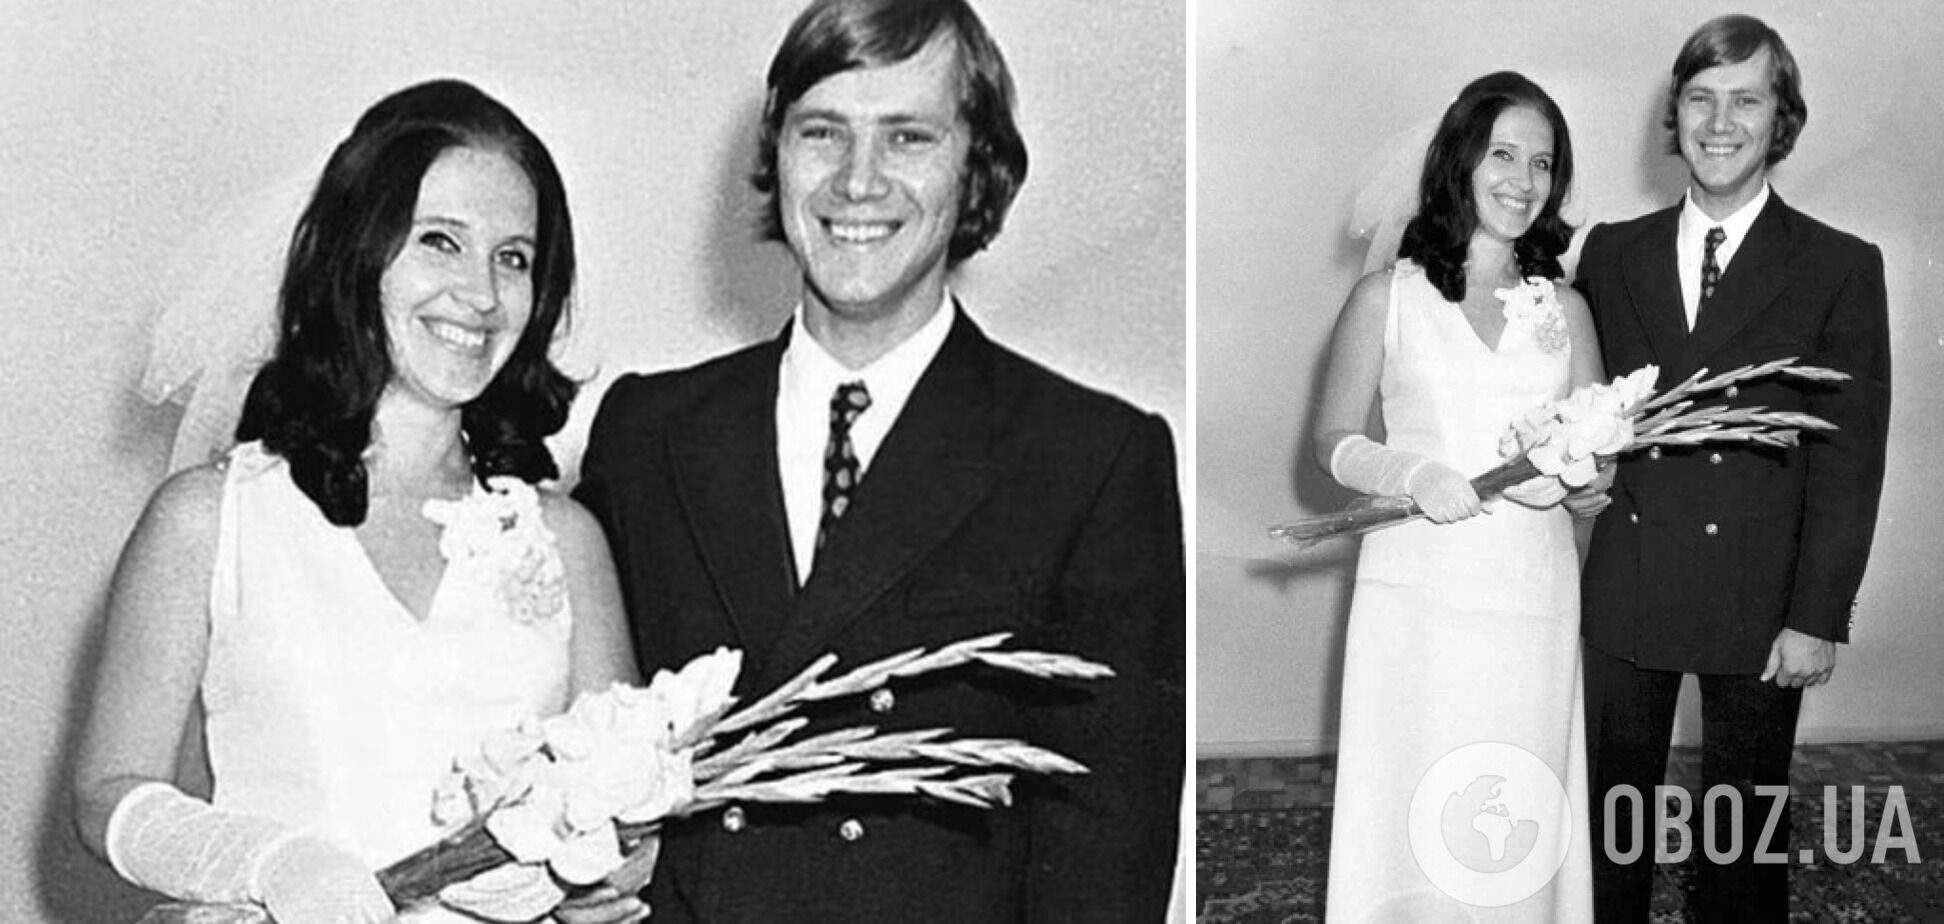 Надія Бабкіна вперше вийшла заміж у 1974 році